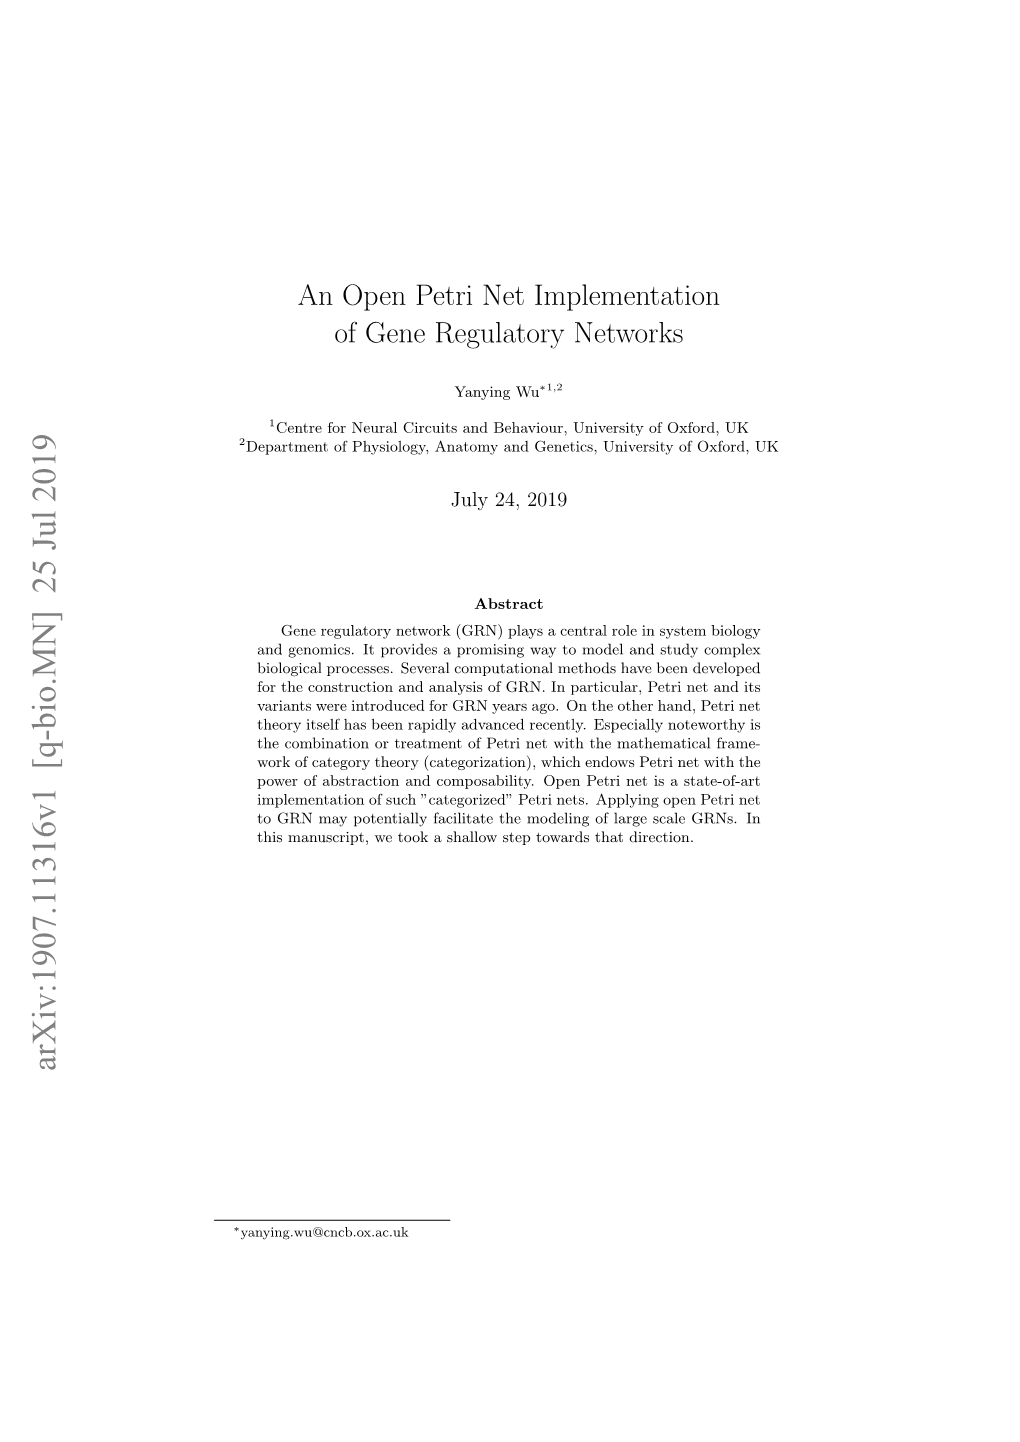 An Open Petri Net Implementation of Gene Regulatory Networks